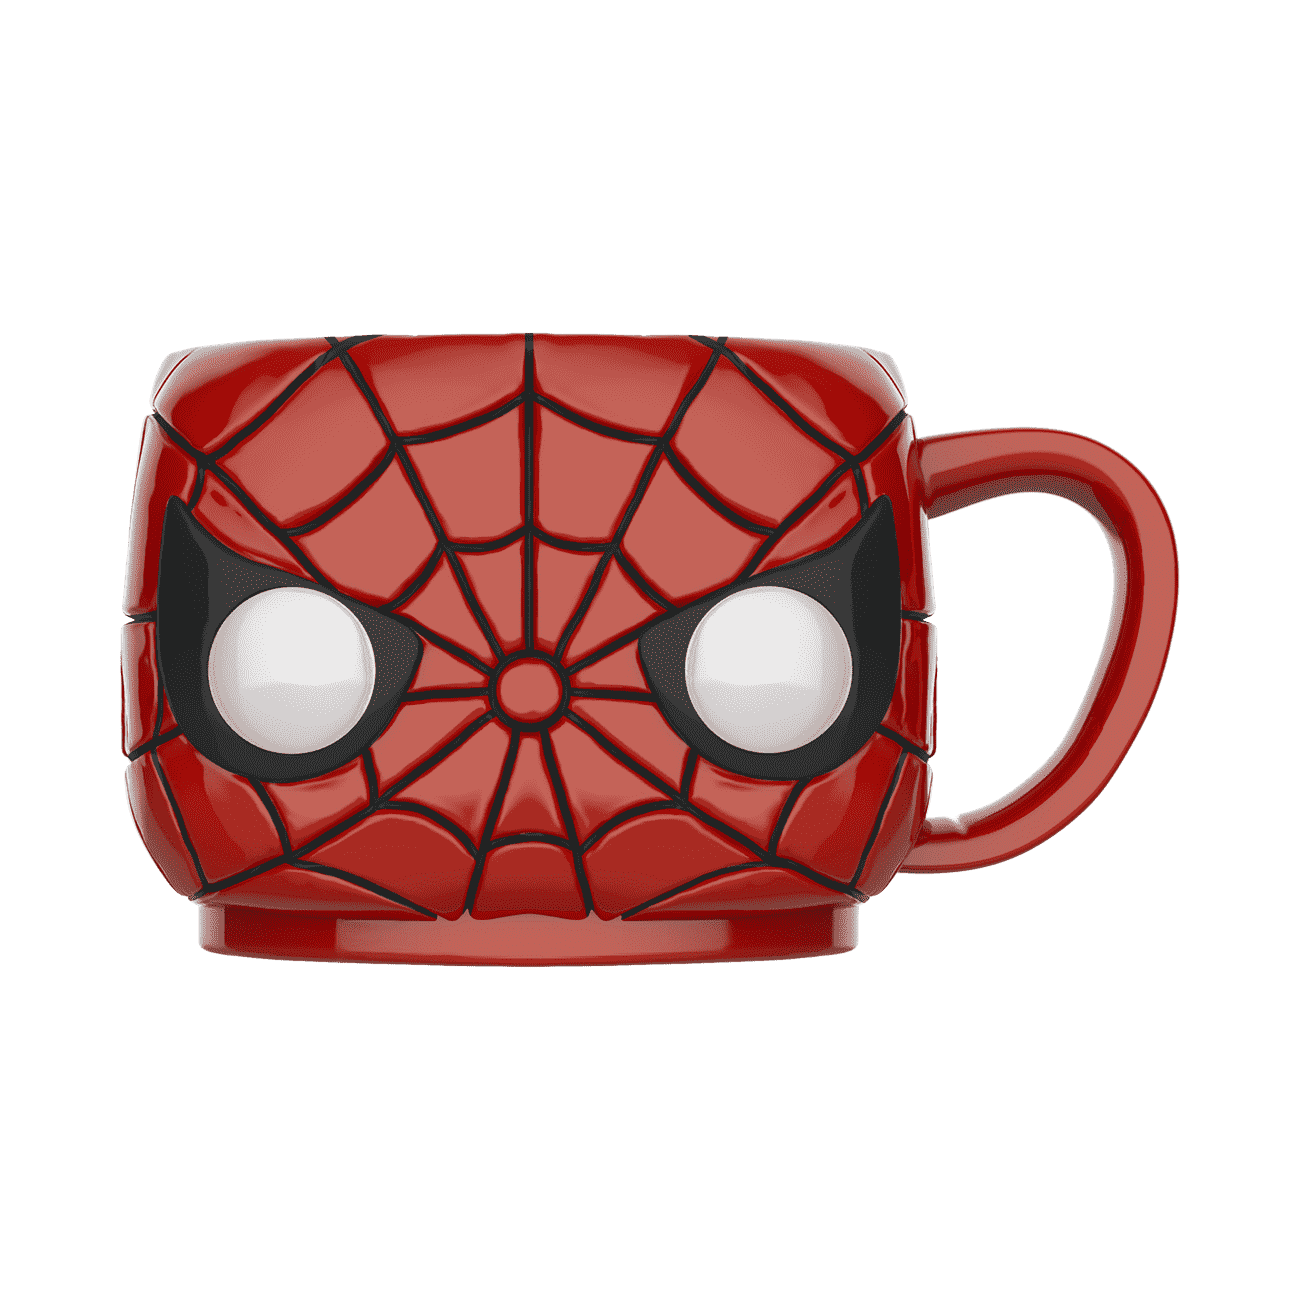 Buy Spider-Man Ceramic Mug at Funko.